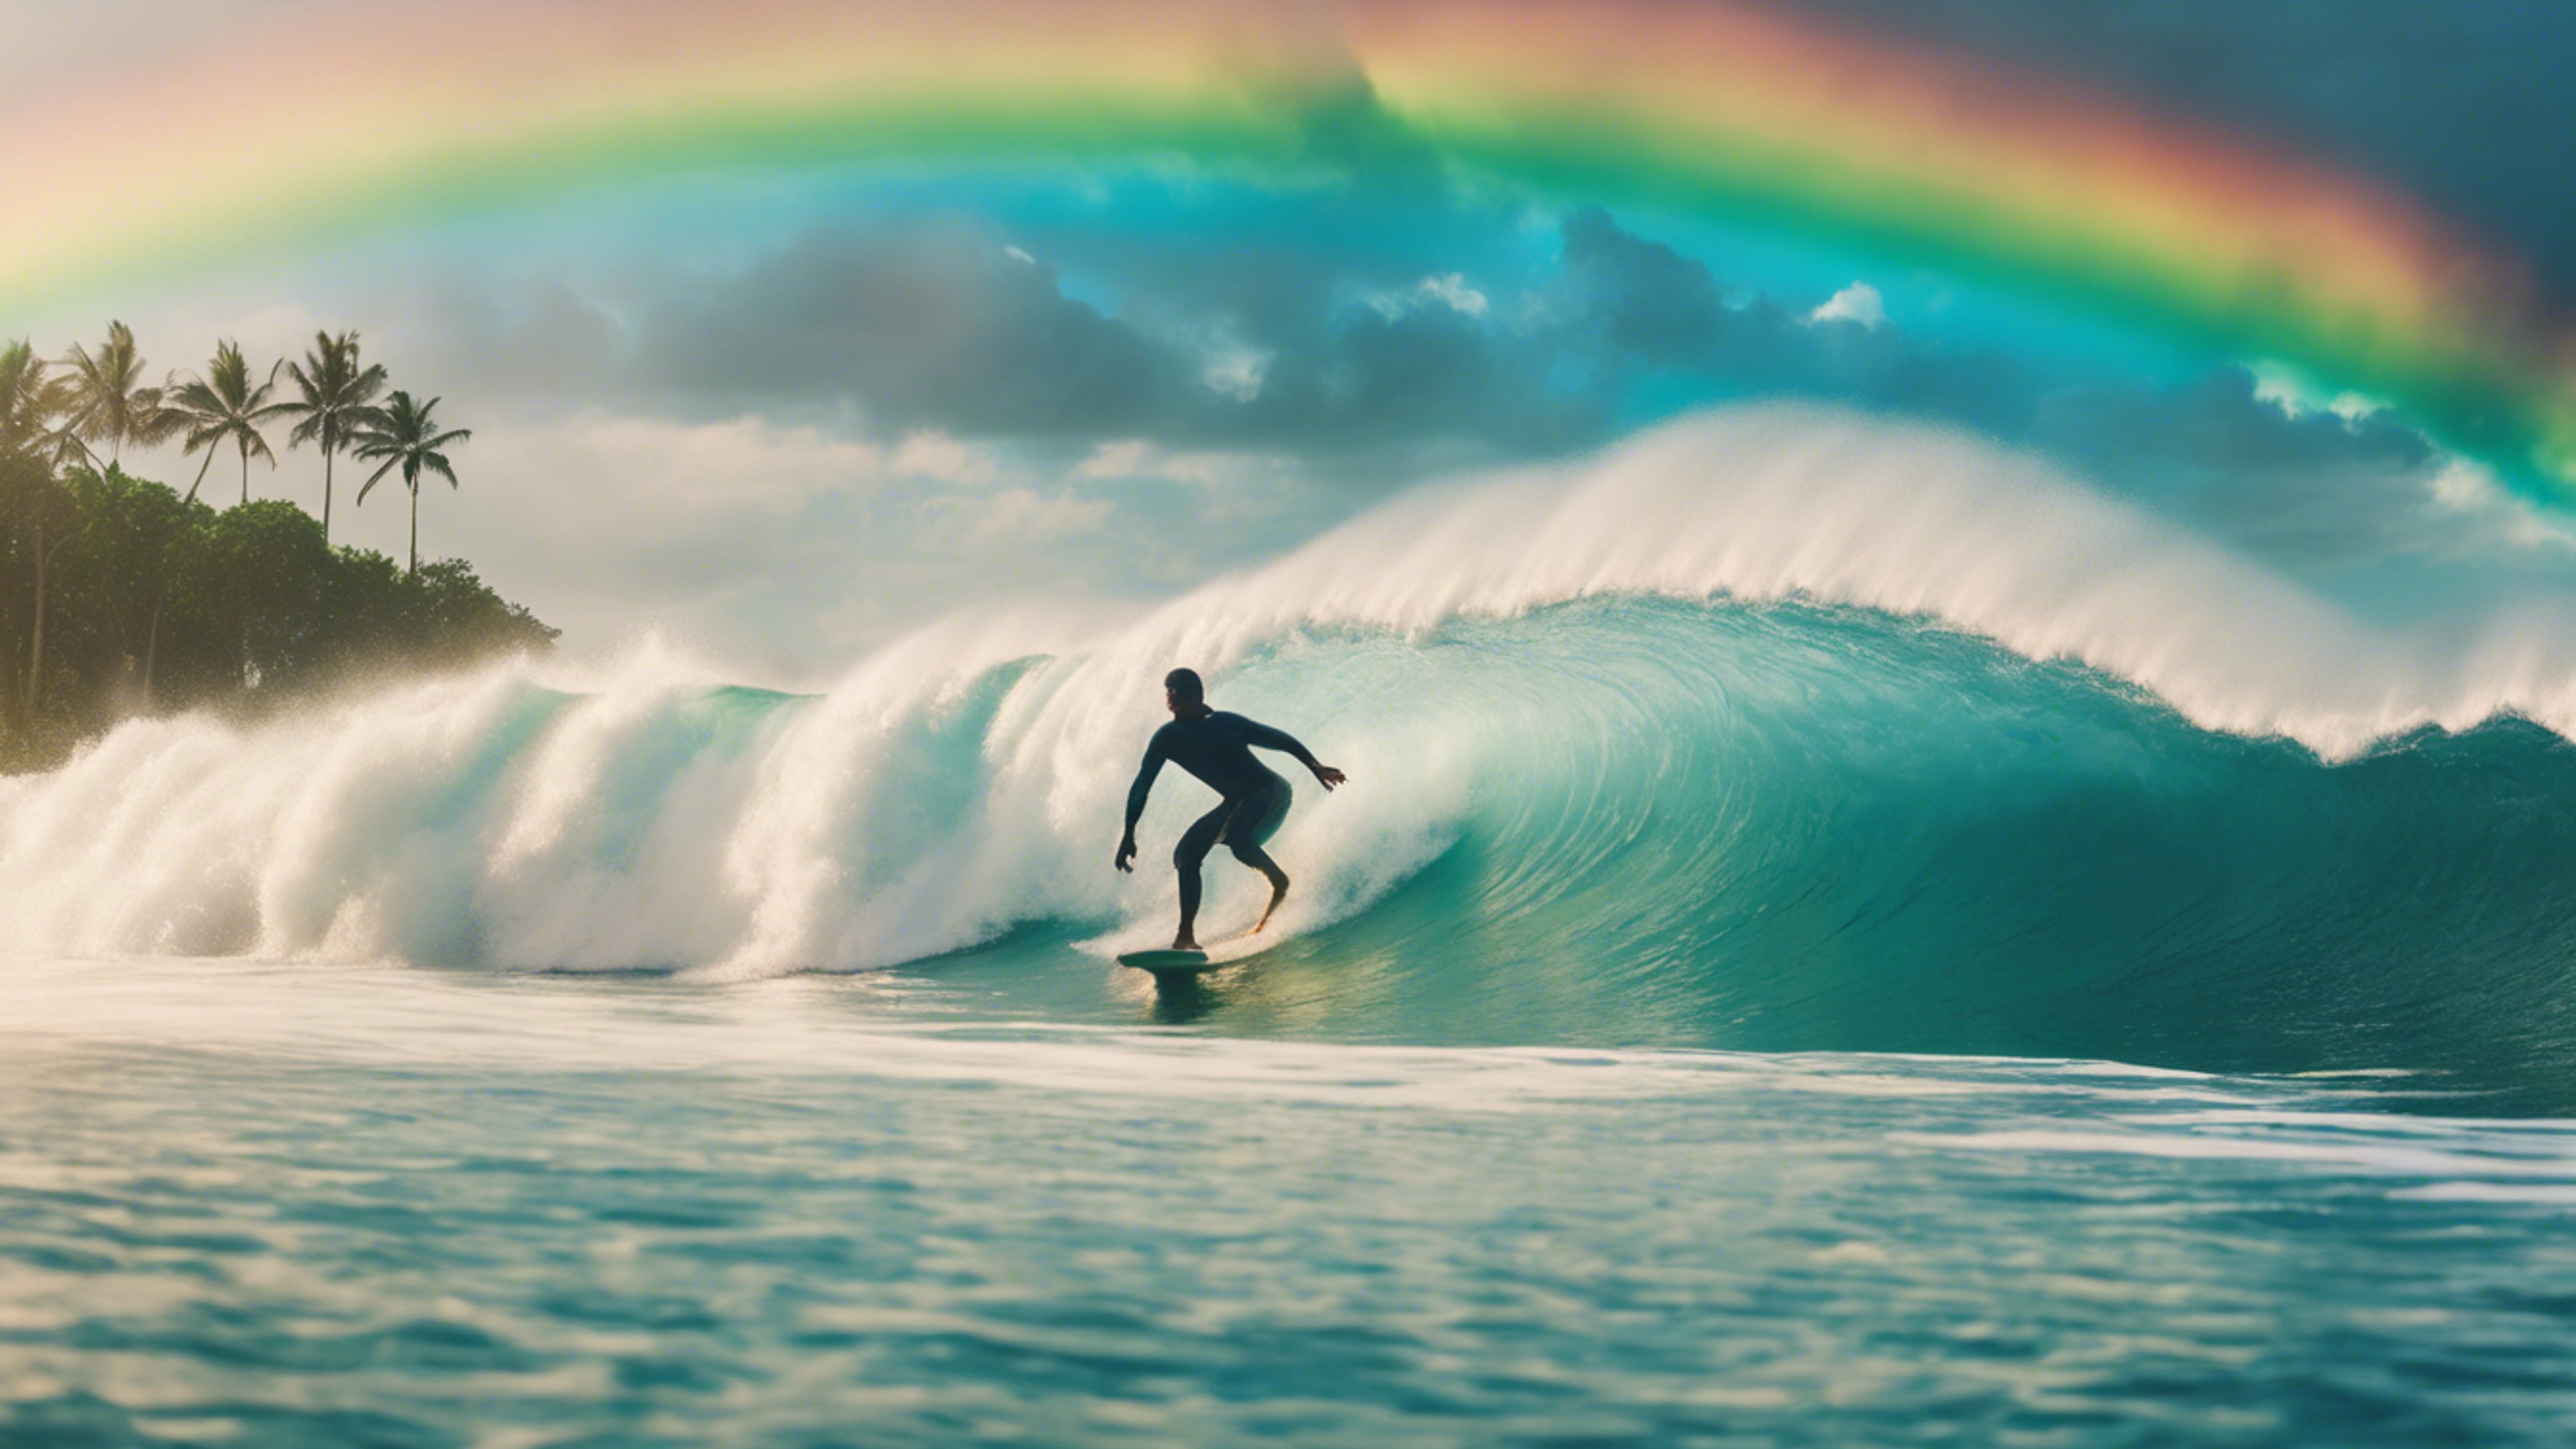 A spontaneous man surfing on a giant wave under a scintillating rainbow in a tropical ocean. Ταπετσαρία[41deec9b24da40d39c6d]